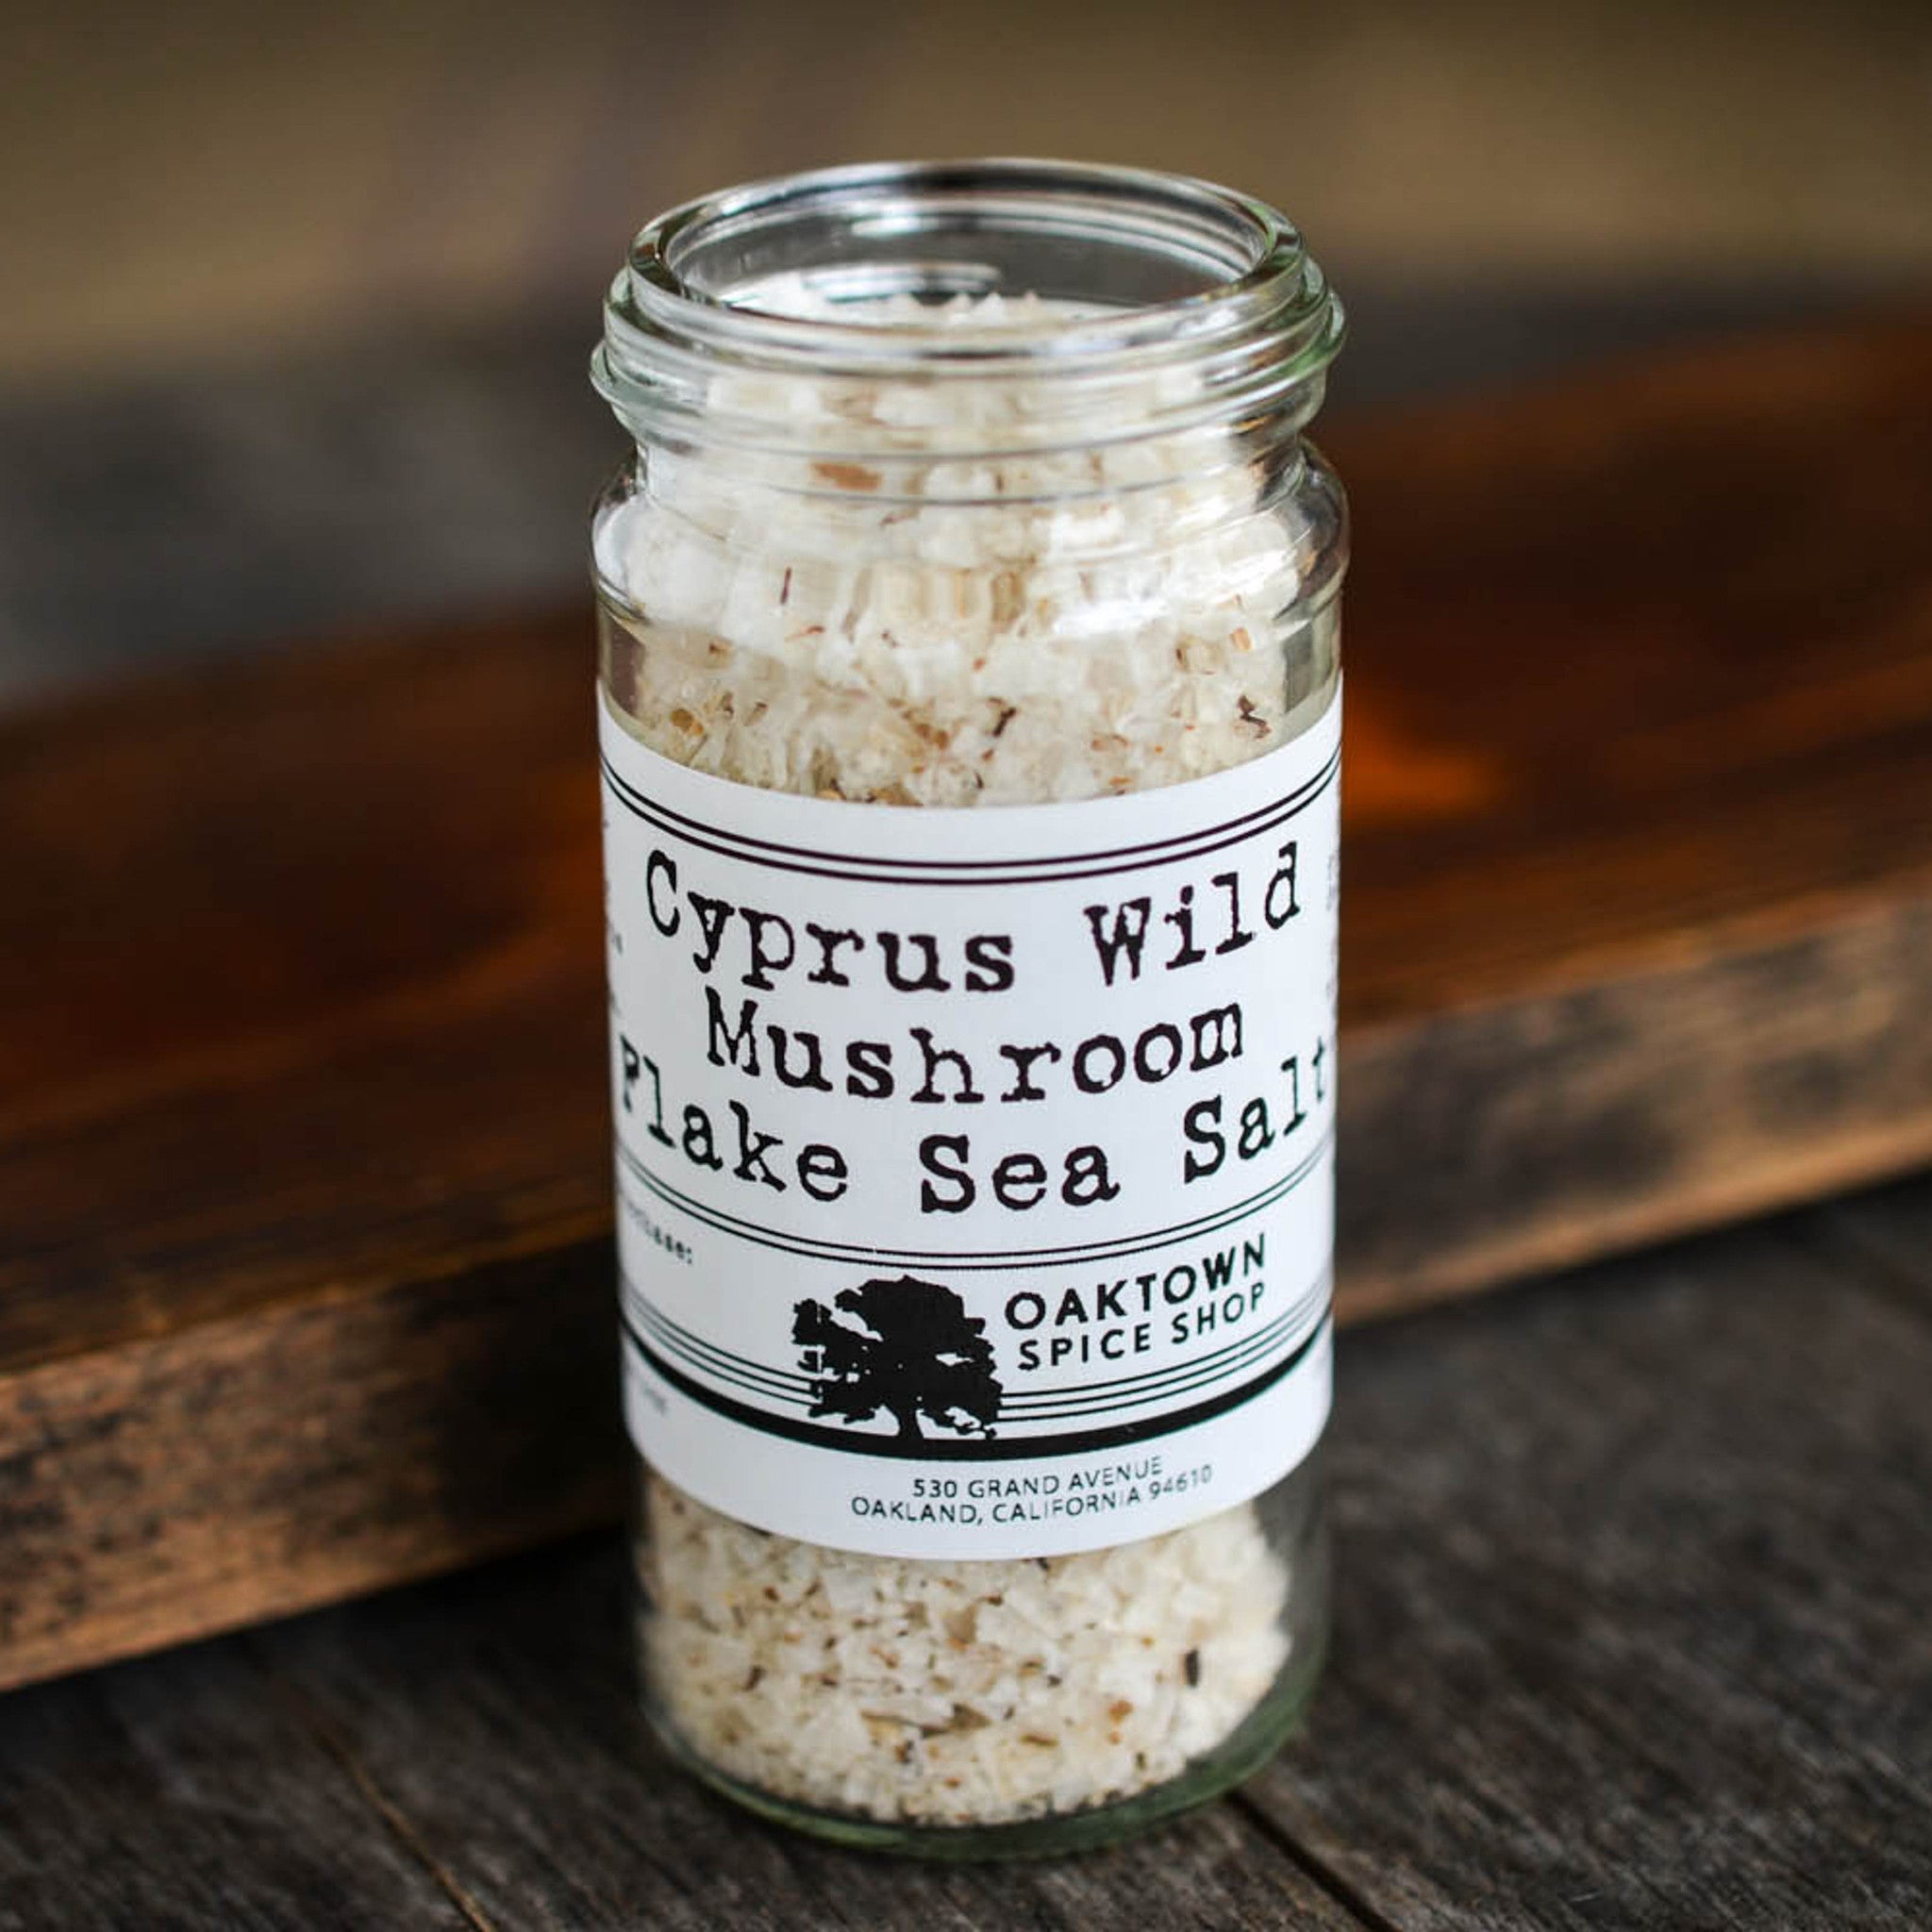 Cyprus Wild Mushroom Flake Sea Salt by Oaktown Spice Shop has wild mushroom flavor